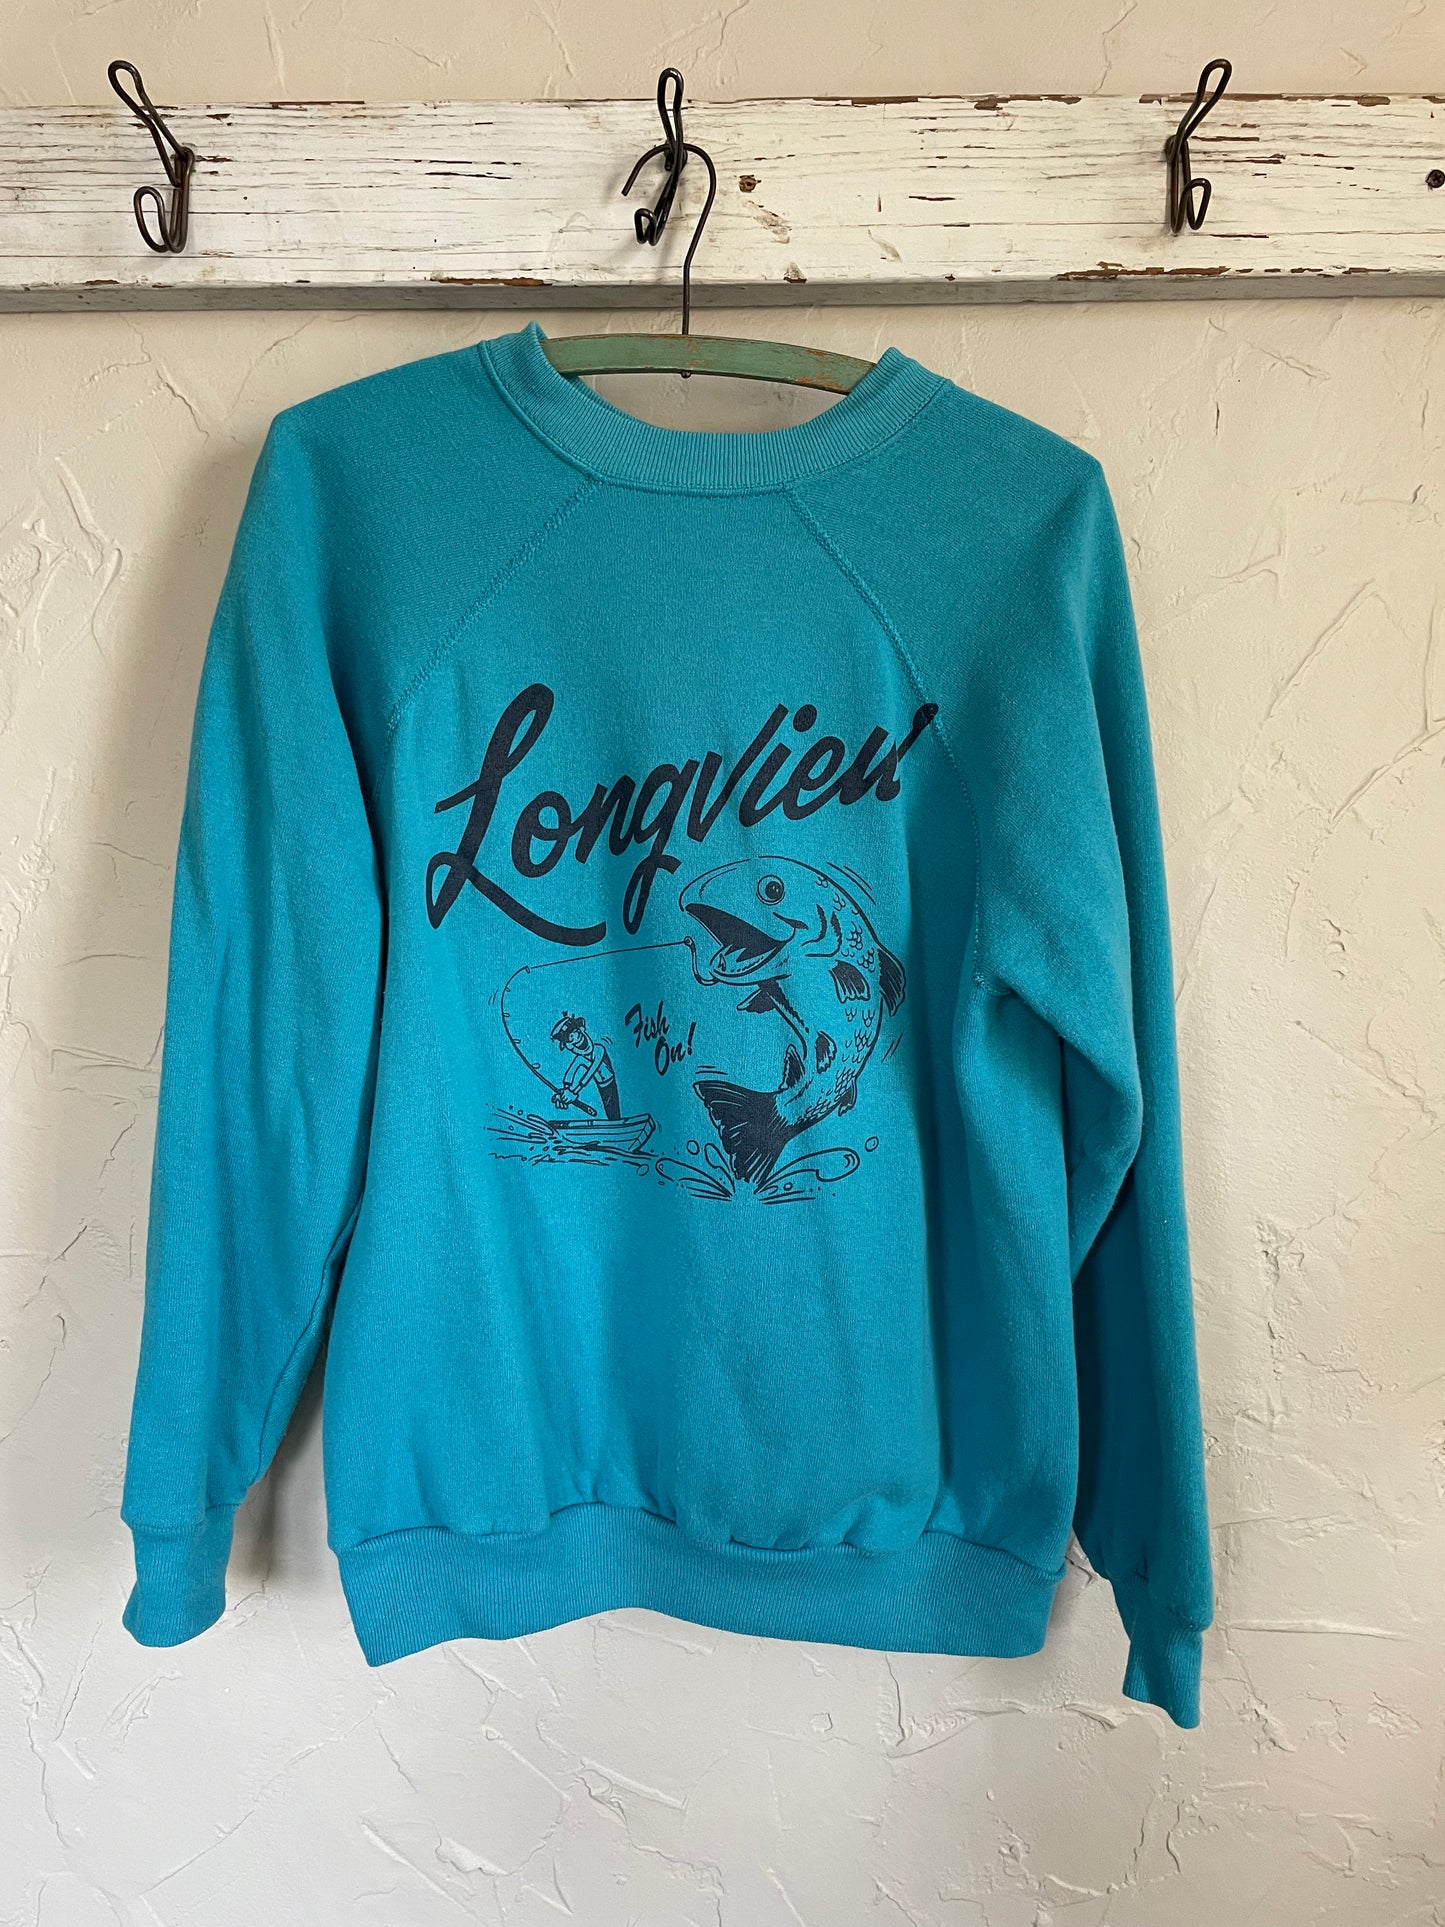 80s Longview “Fish On!” Sweatshirt